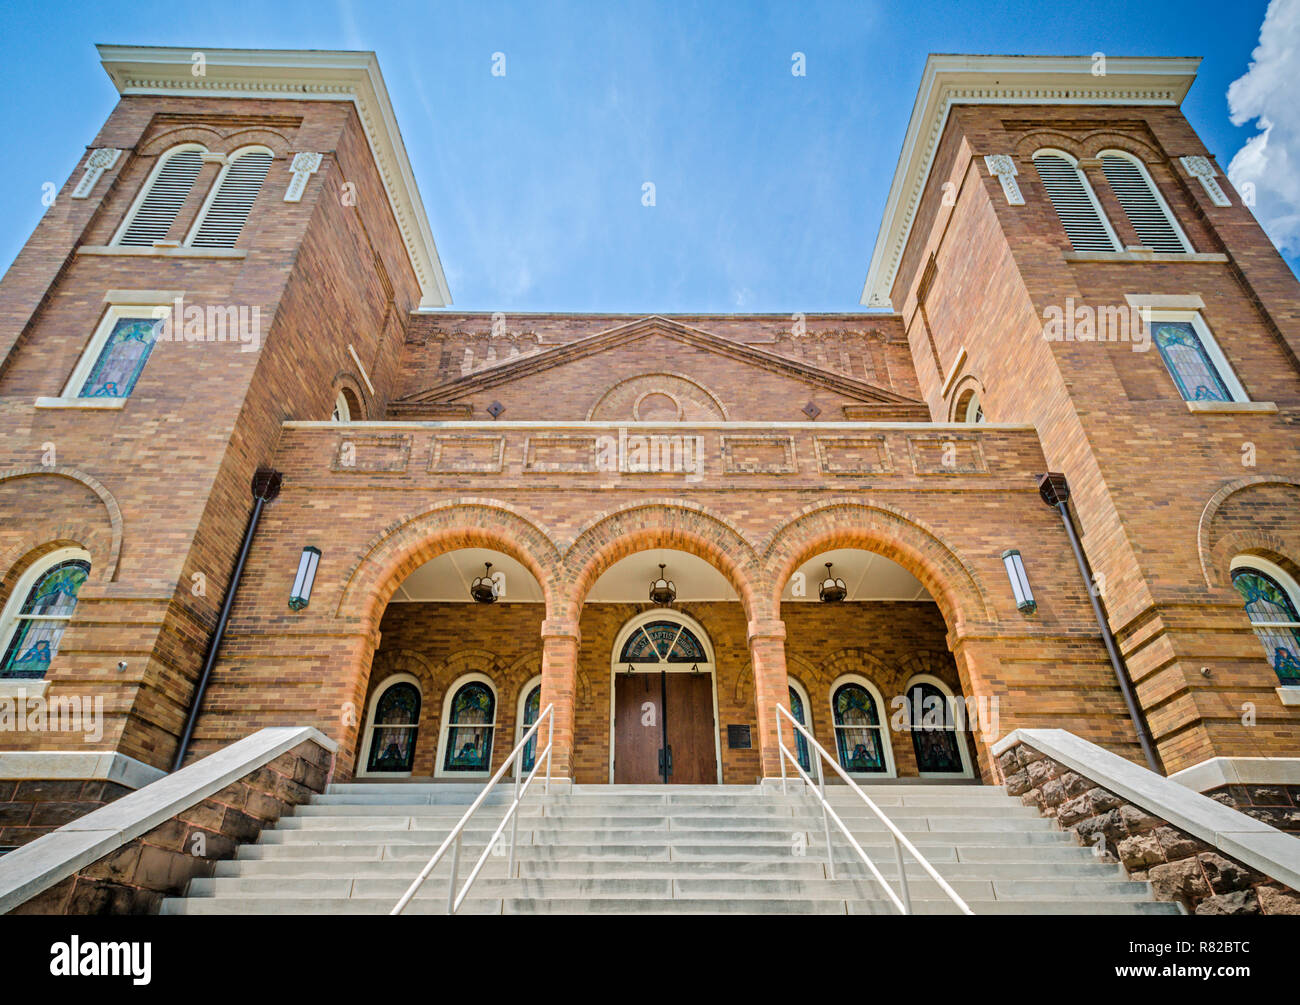 Birmingham’s 16th St. Baptist Church is pictured, July 12, 2015, in Birmingham, Alabama. Stock Photo